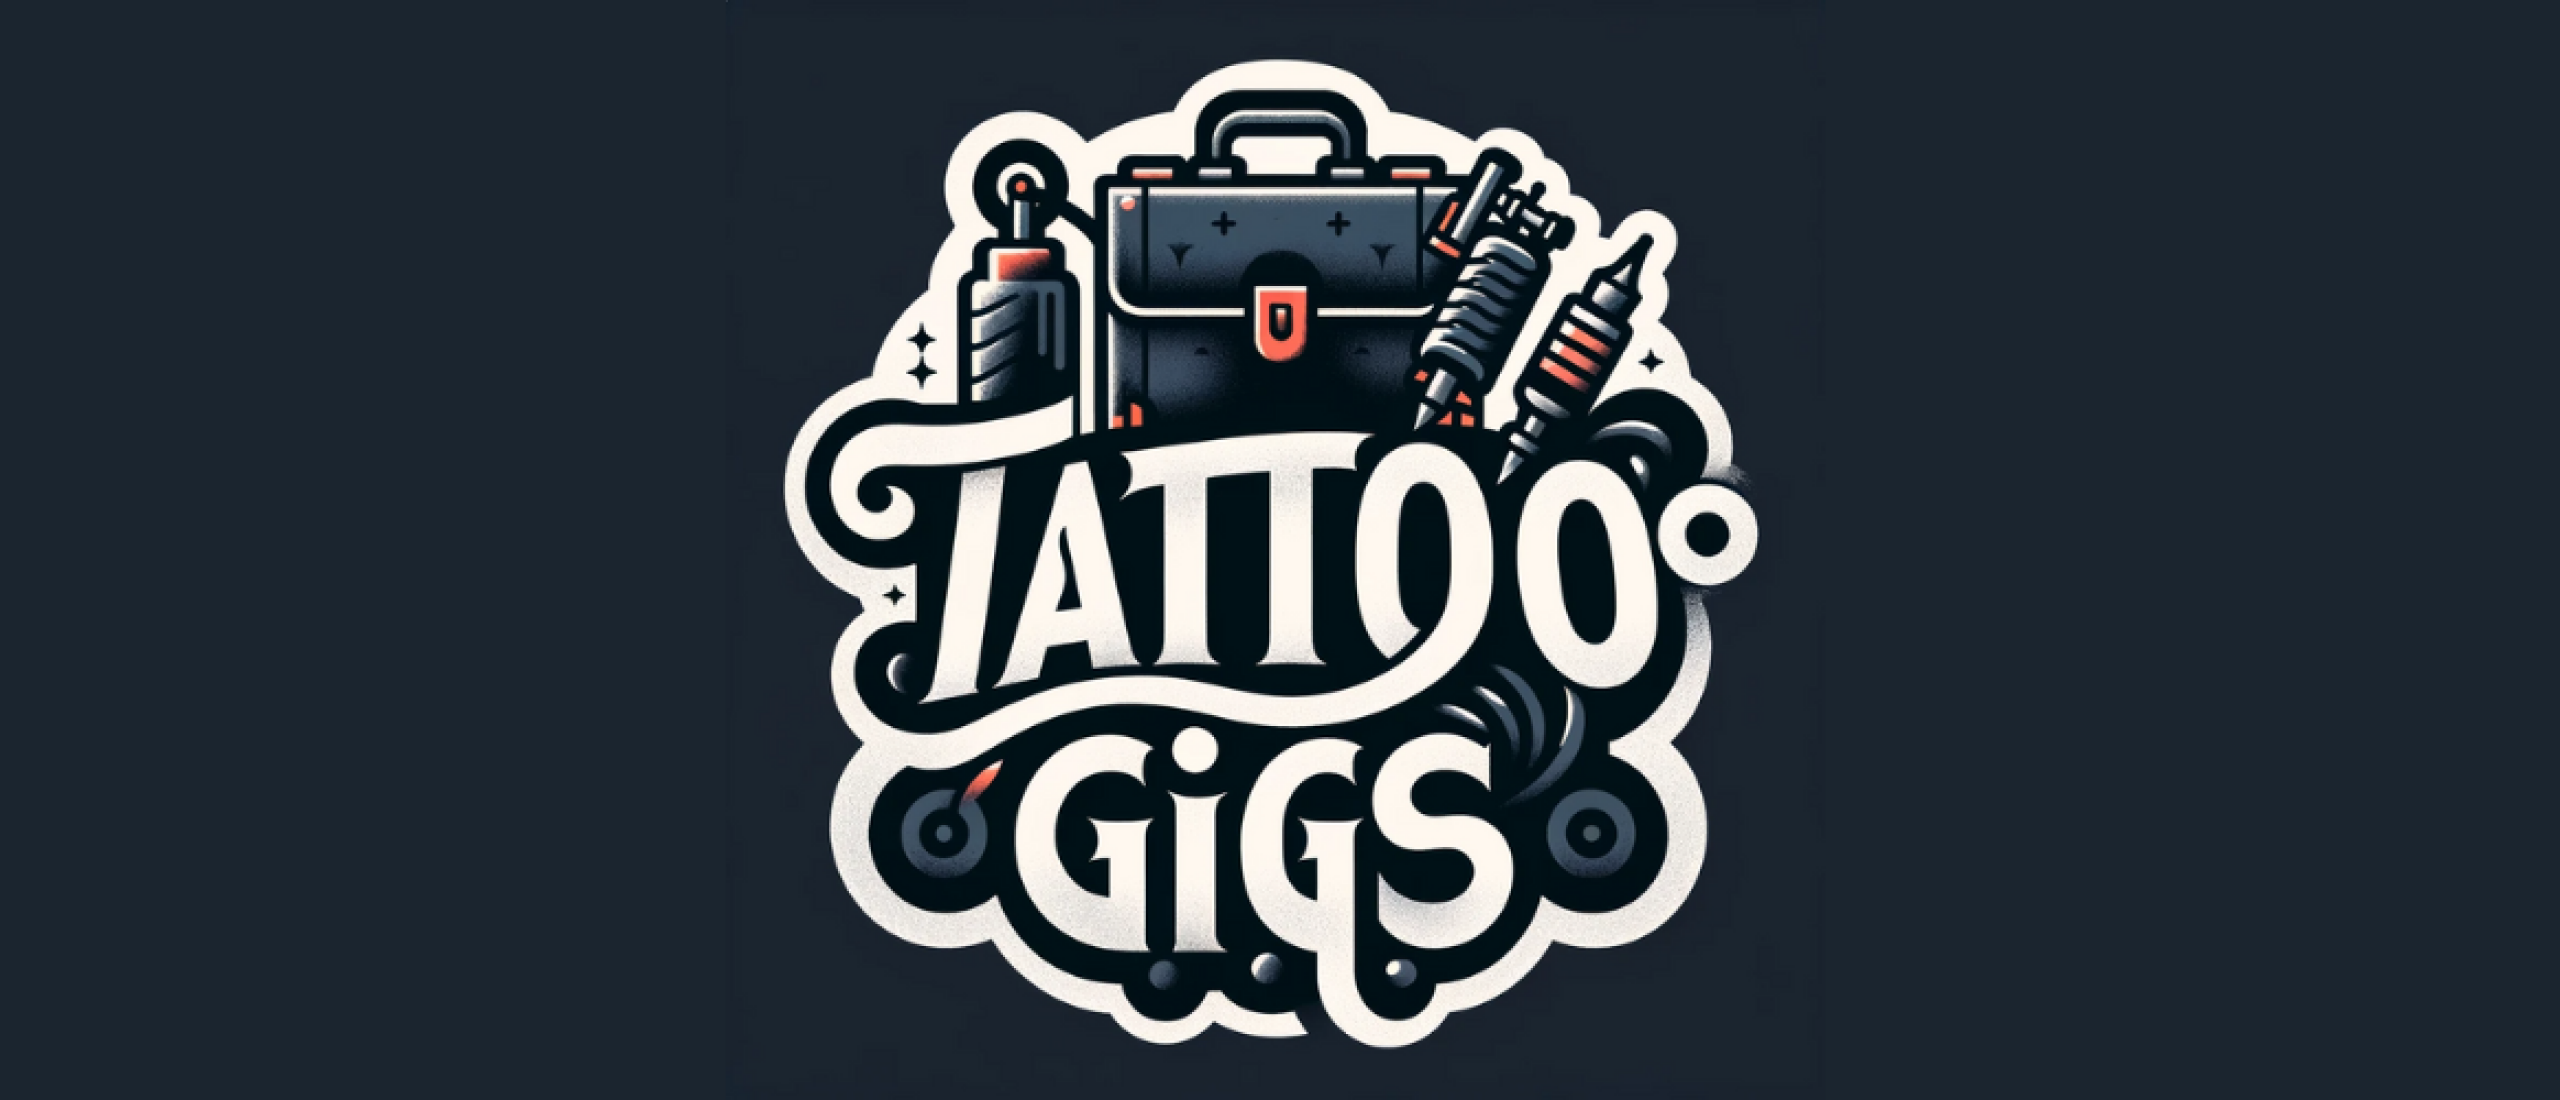 Vind jouw Perfecte Tattoo Studio als Tattoo Artiest met TattooGigs.com